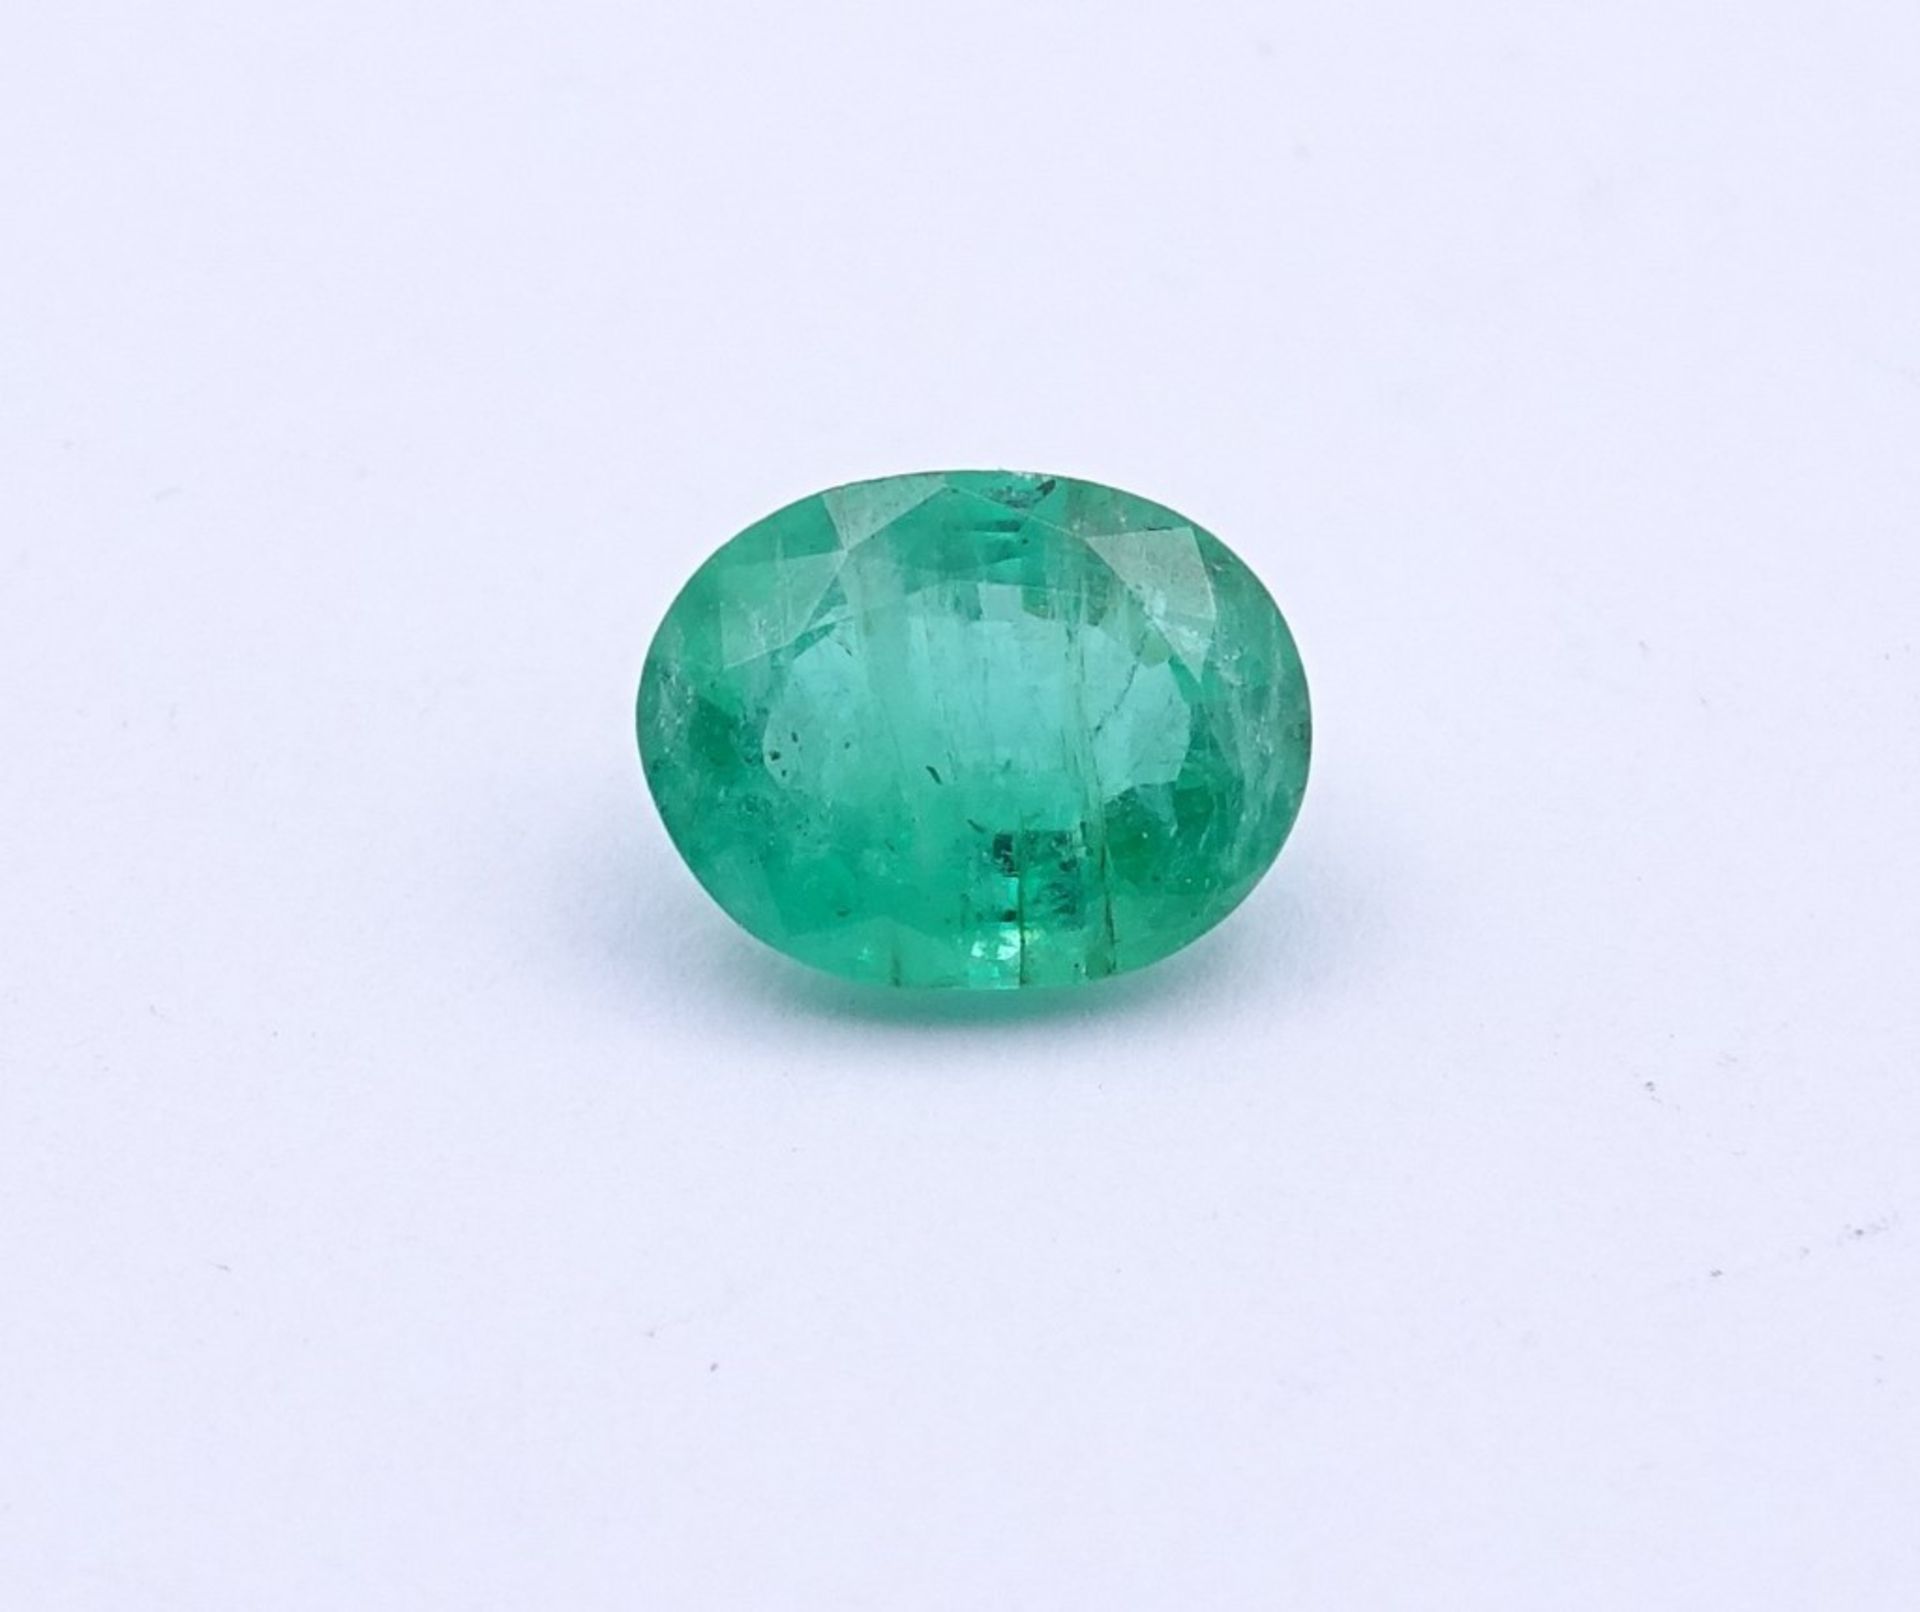 Smaragd von ca. 1,8ct., oval facc."""" - Image 4 of 5